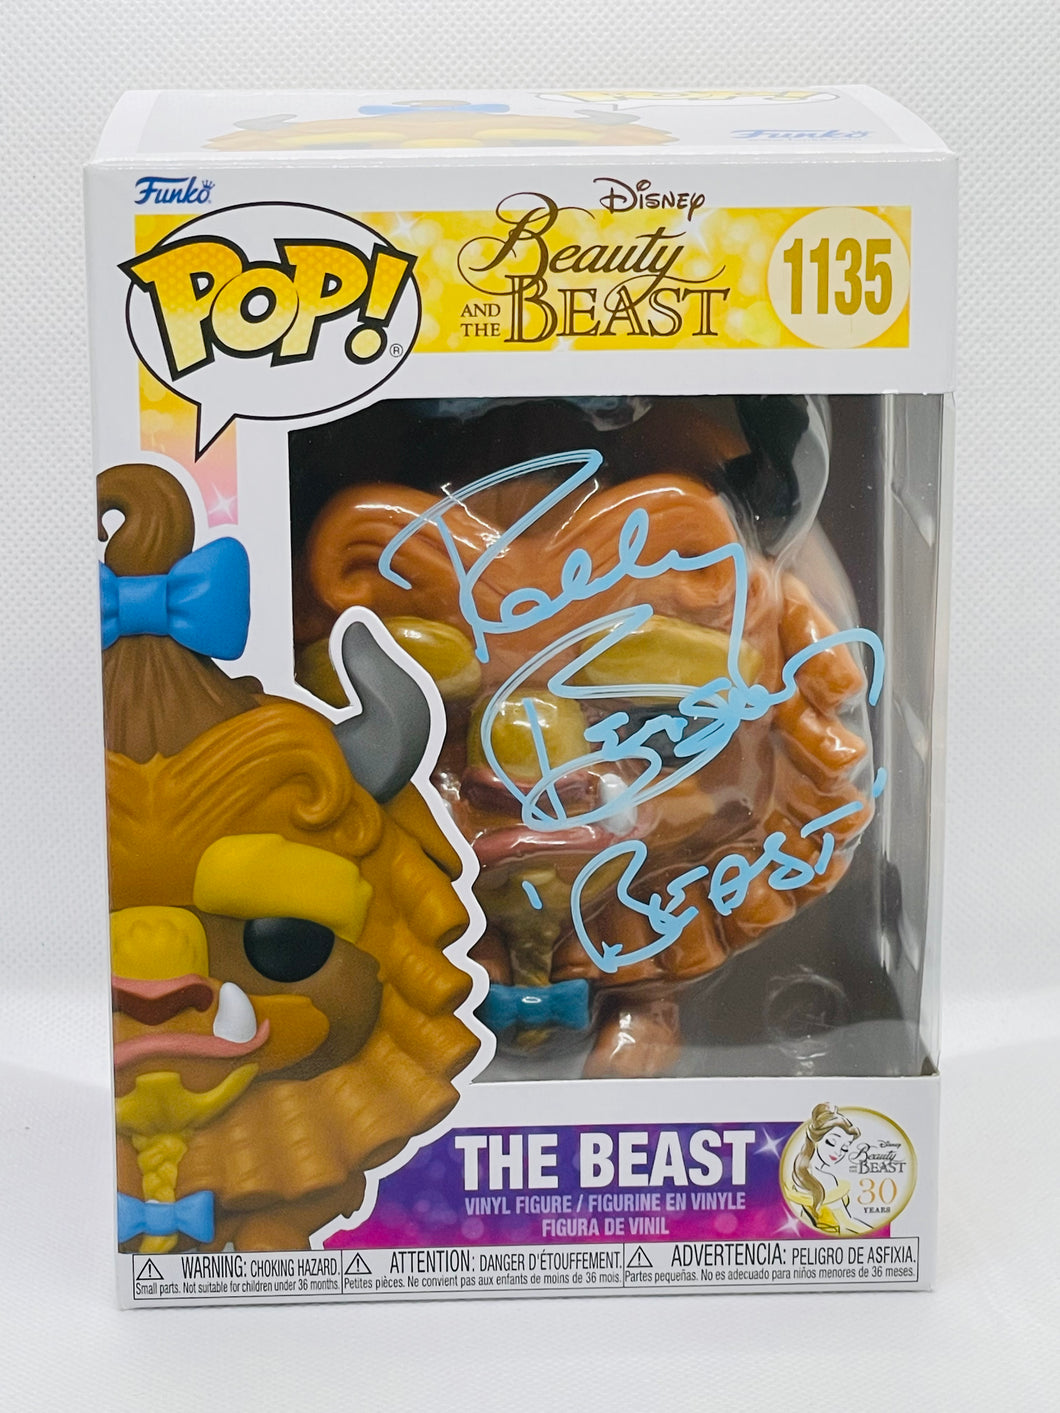 The Beast 1135 Beauty & the Beast Funko Pop signed by Robbie Benson